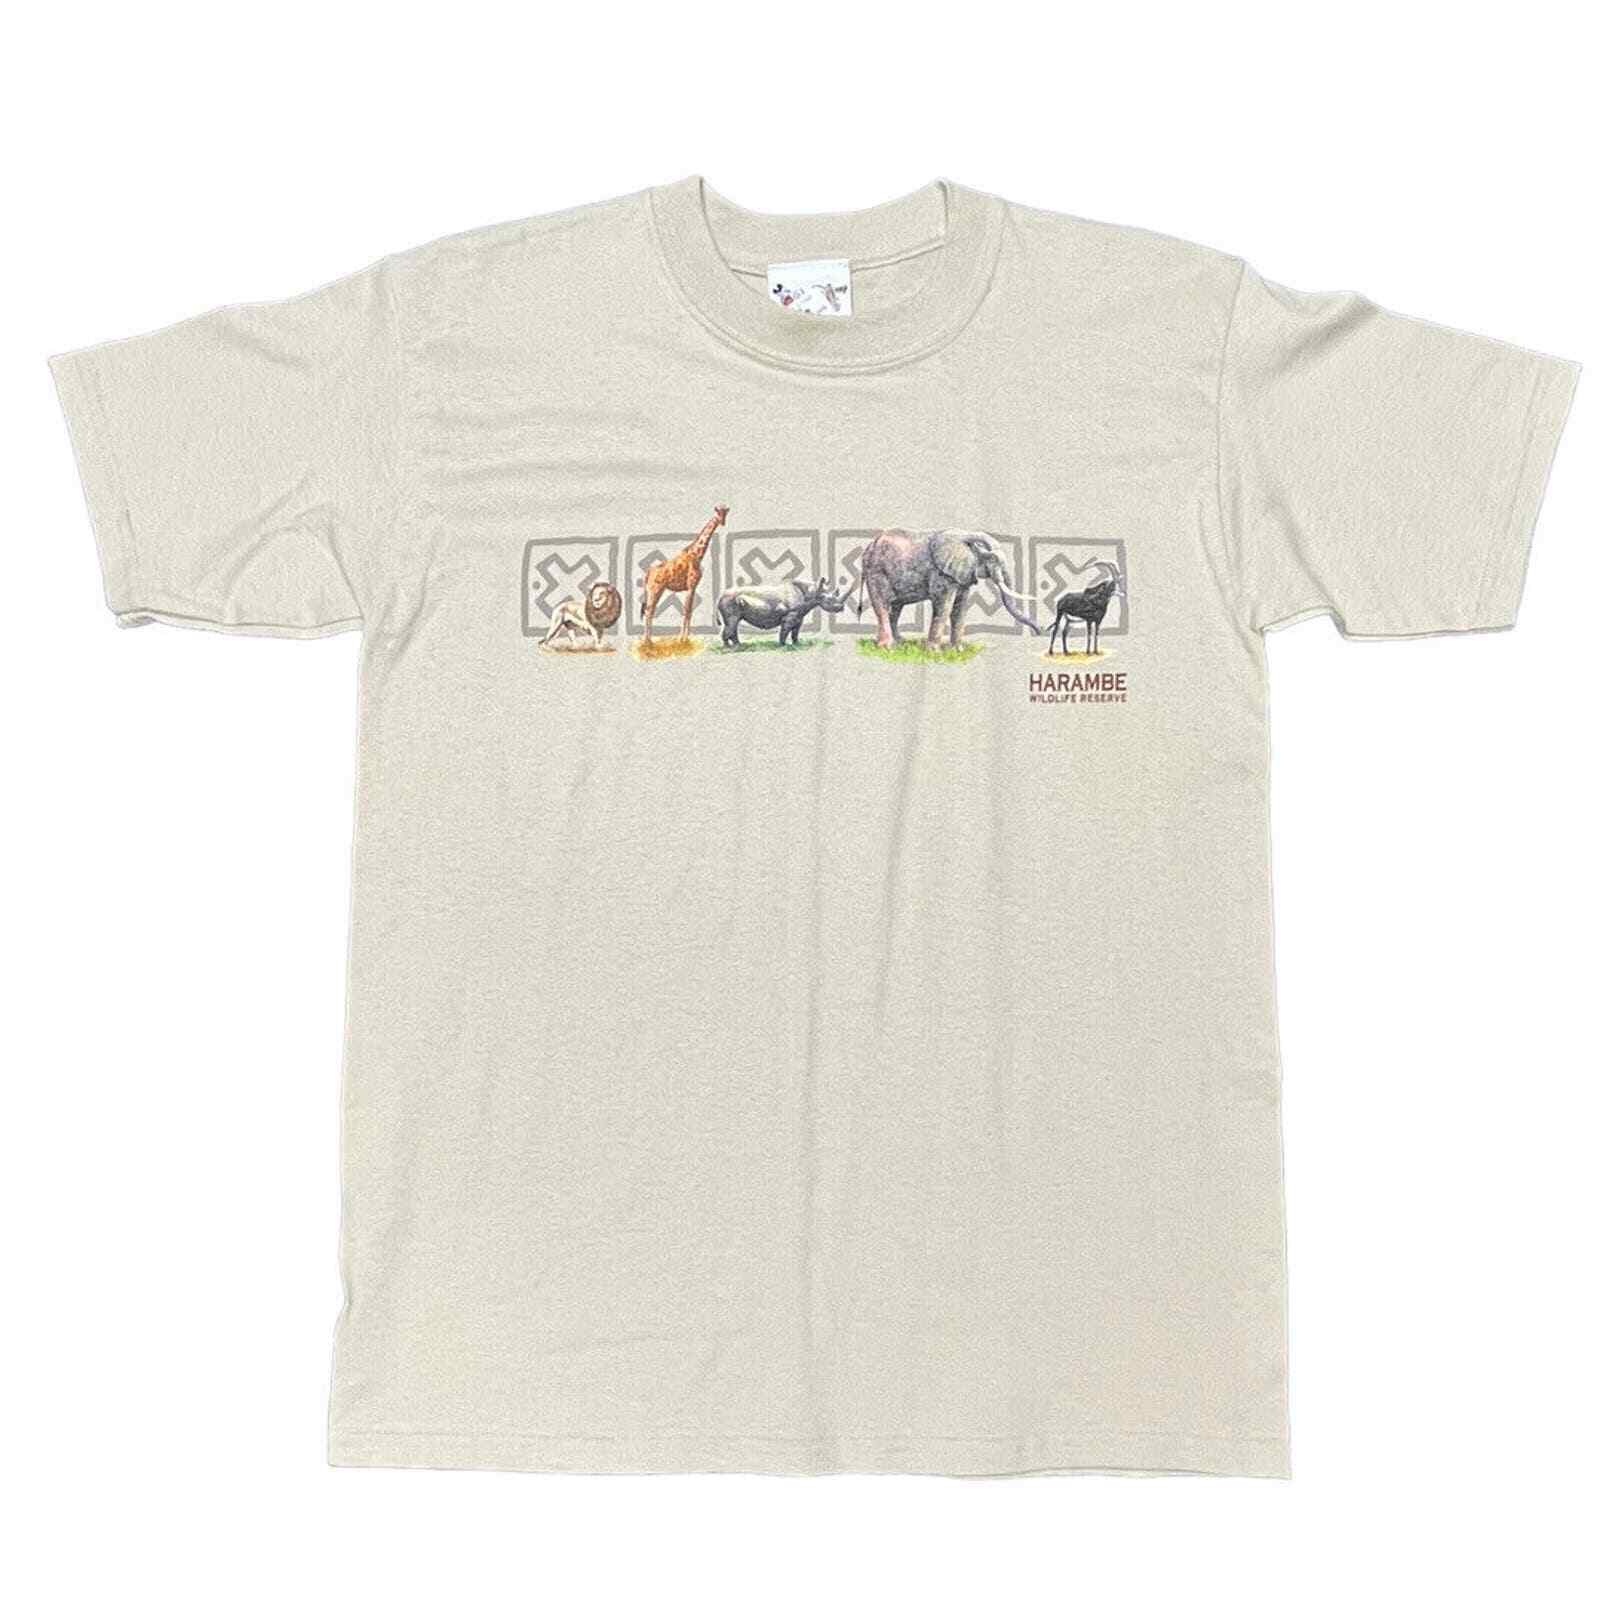 Disney World kids “Harambe Wildlife Reserve” tshirt shirt